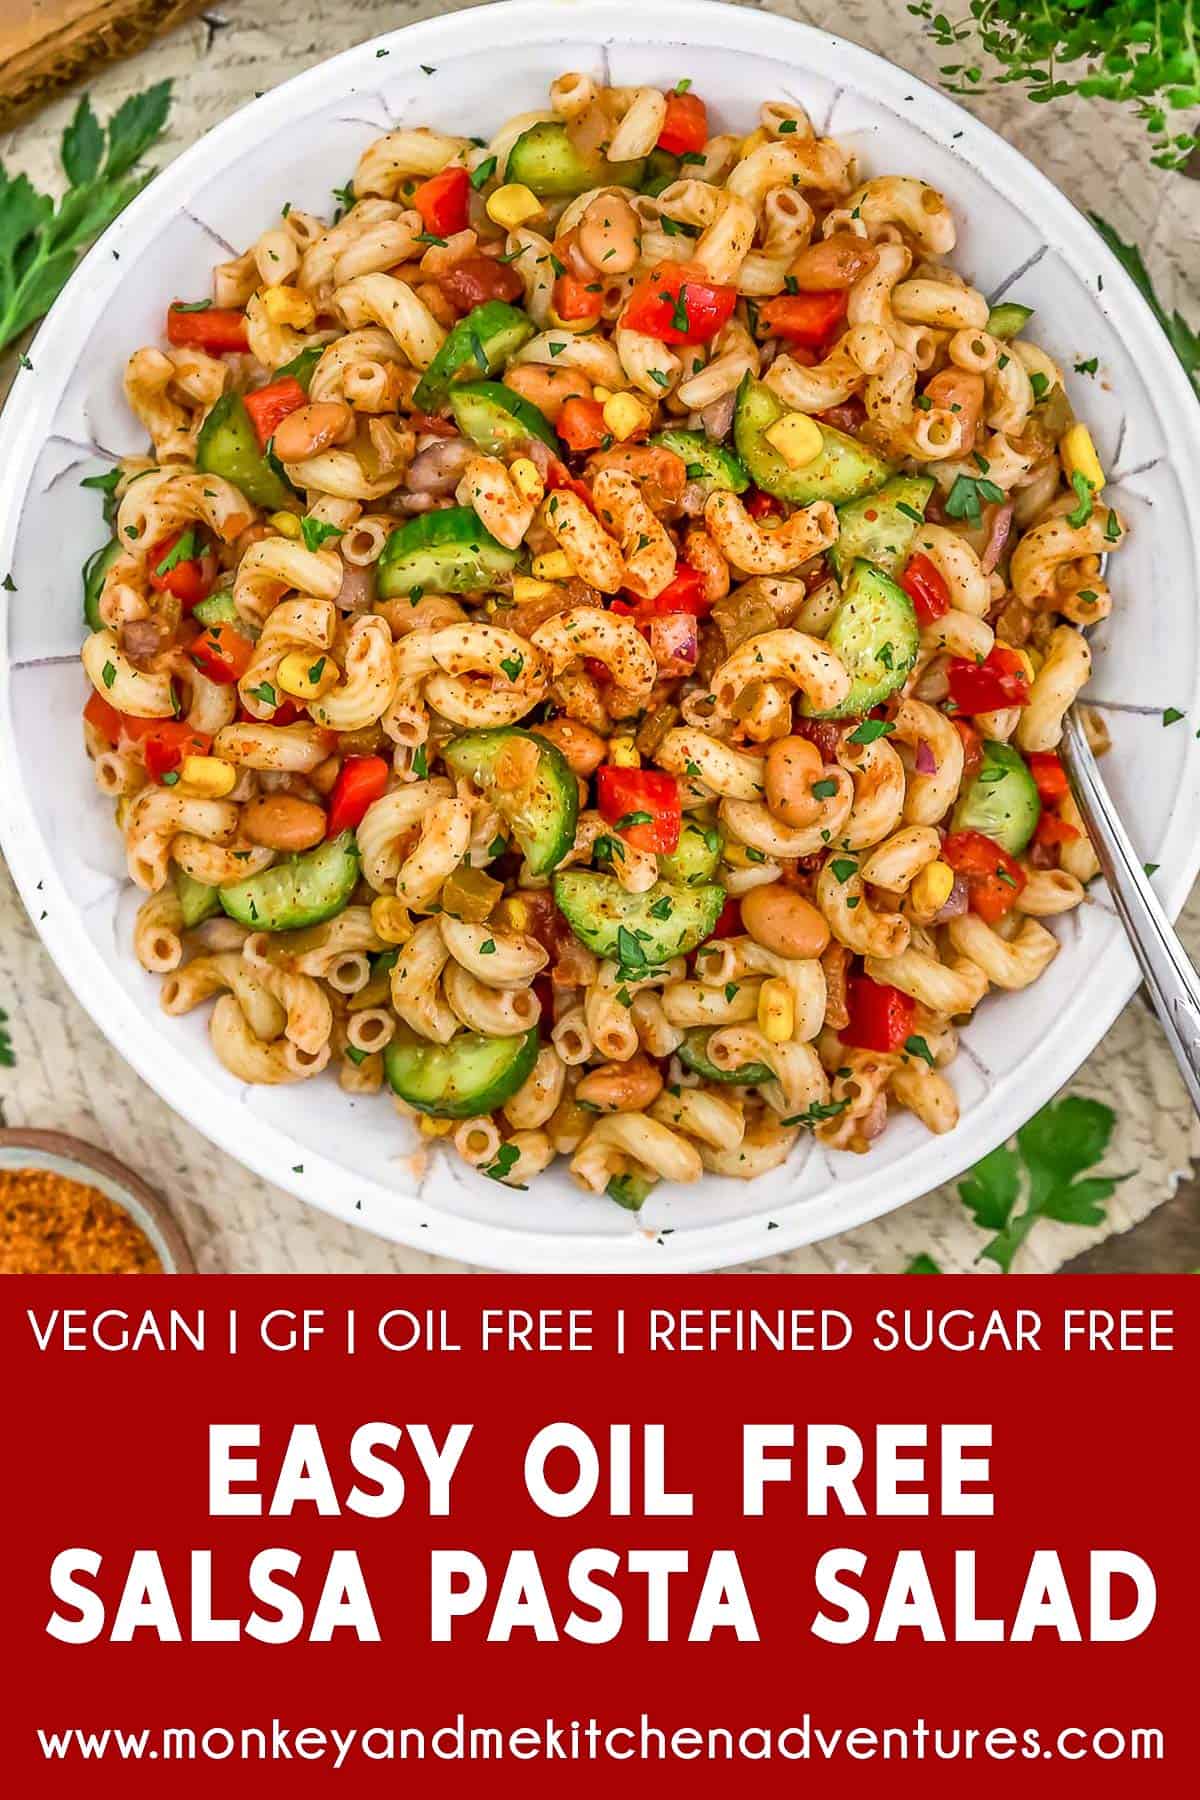 Easy Oil Free Salsa Pasta Salad with text description